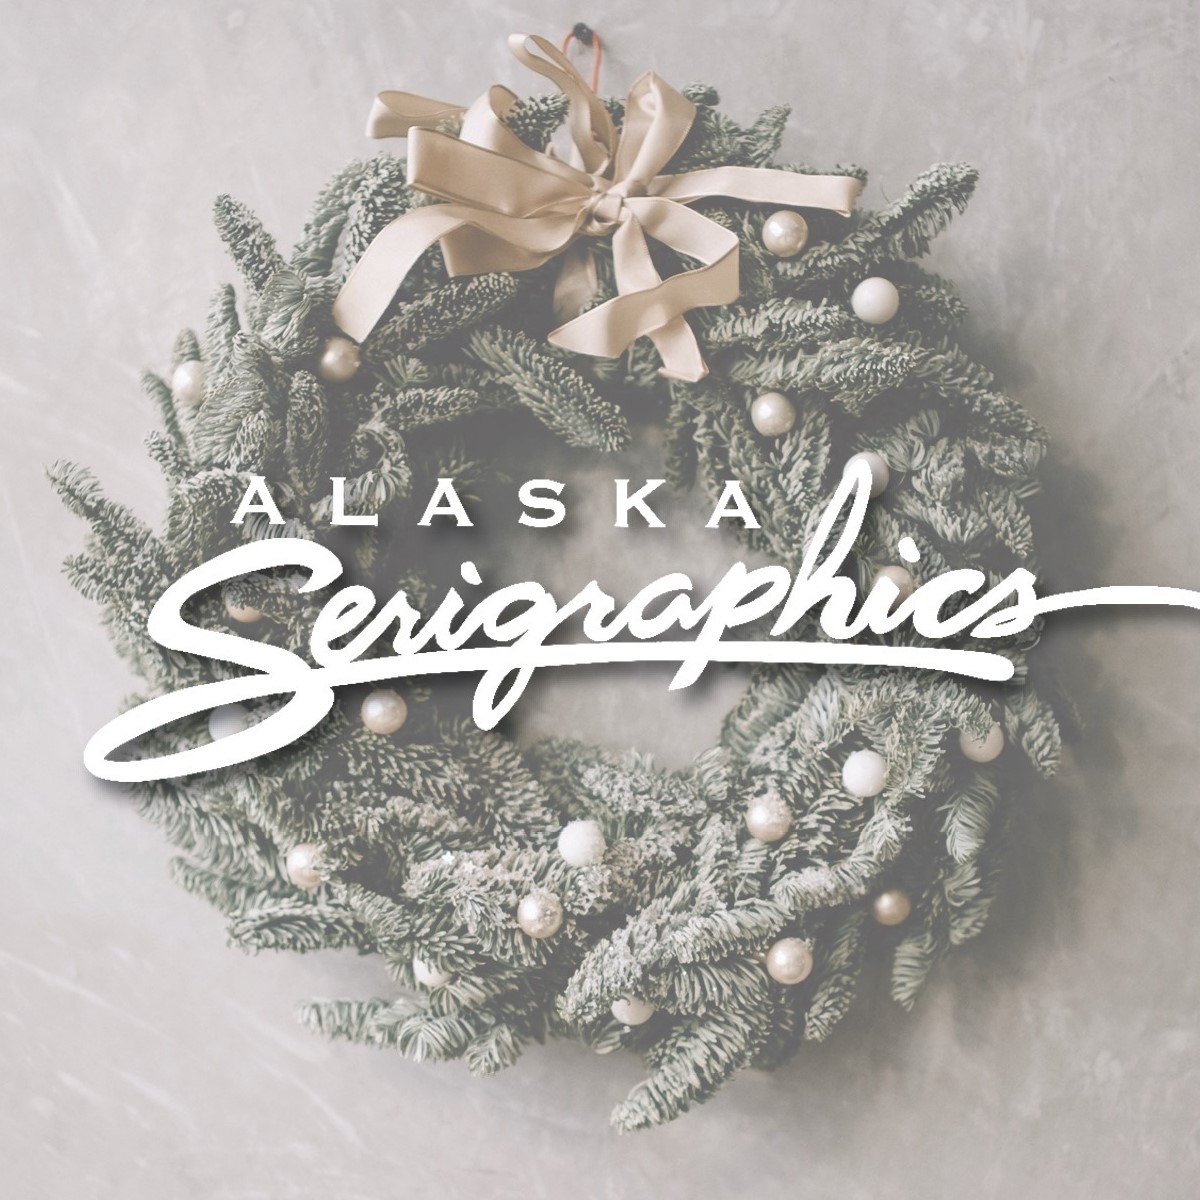 Business logo of Alaska Serigraphics